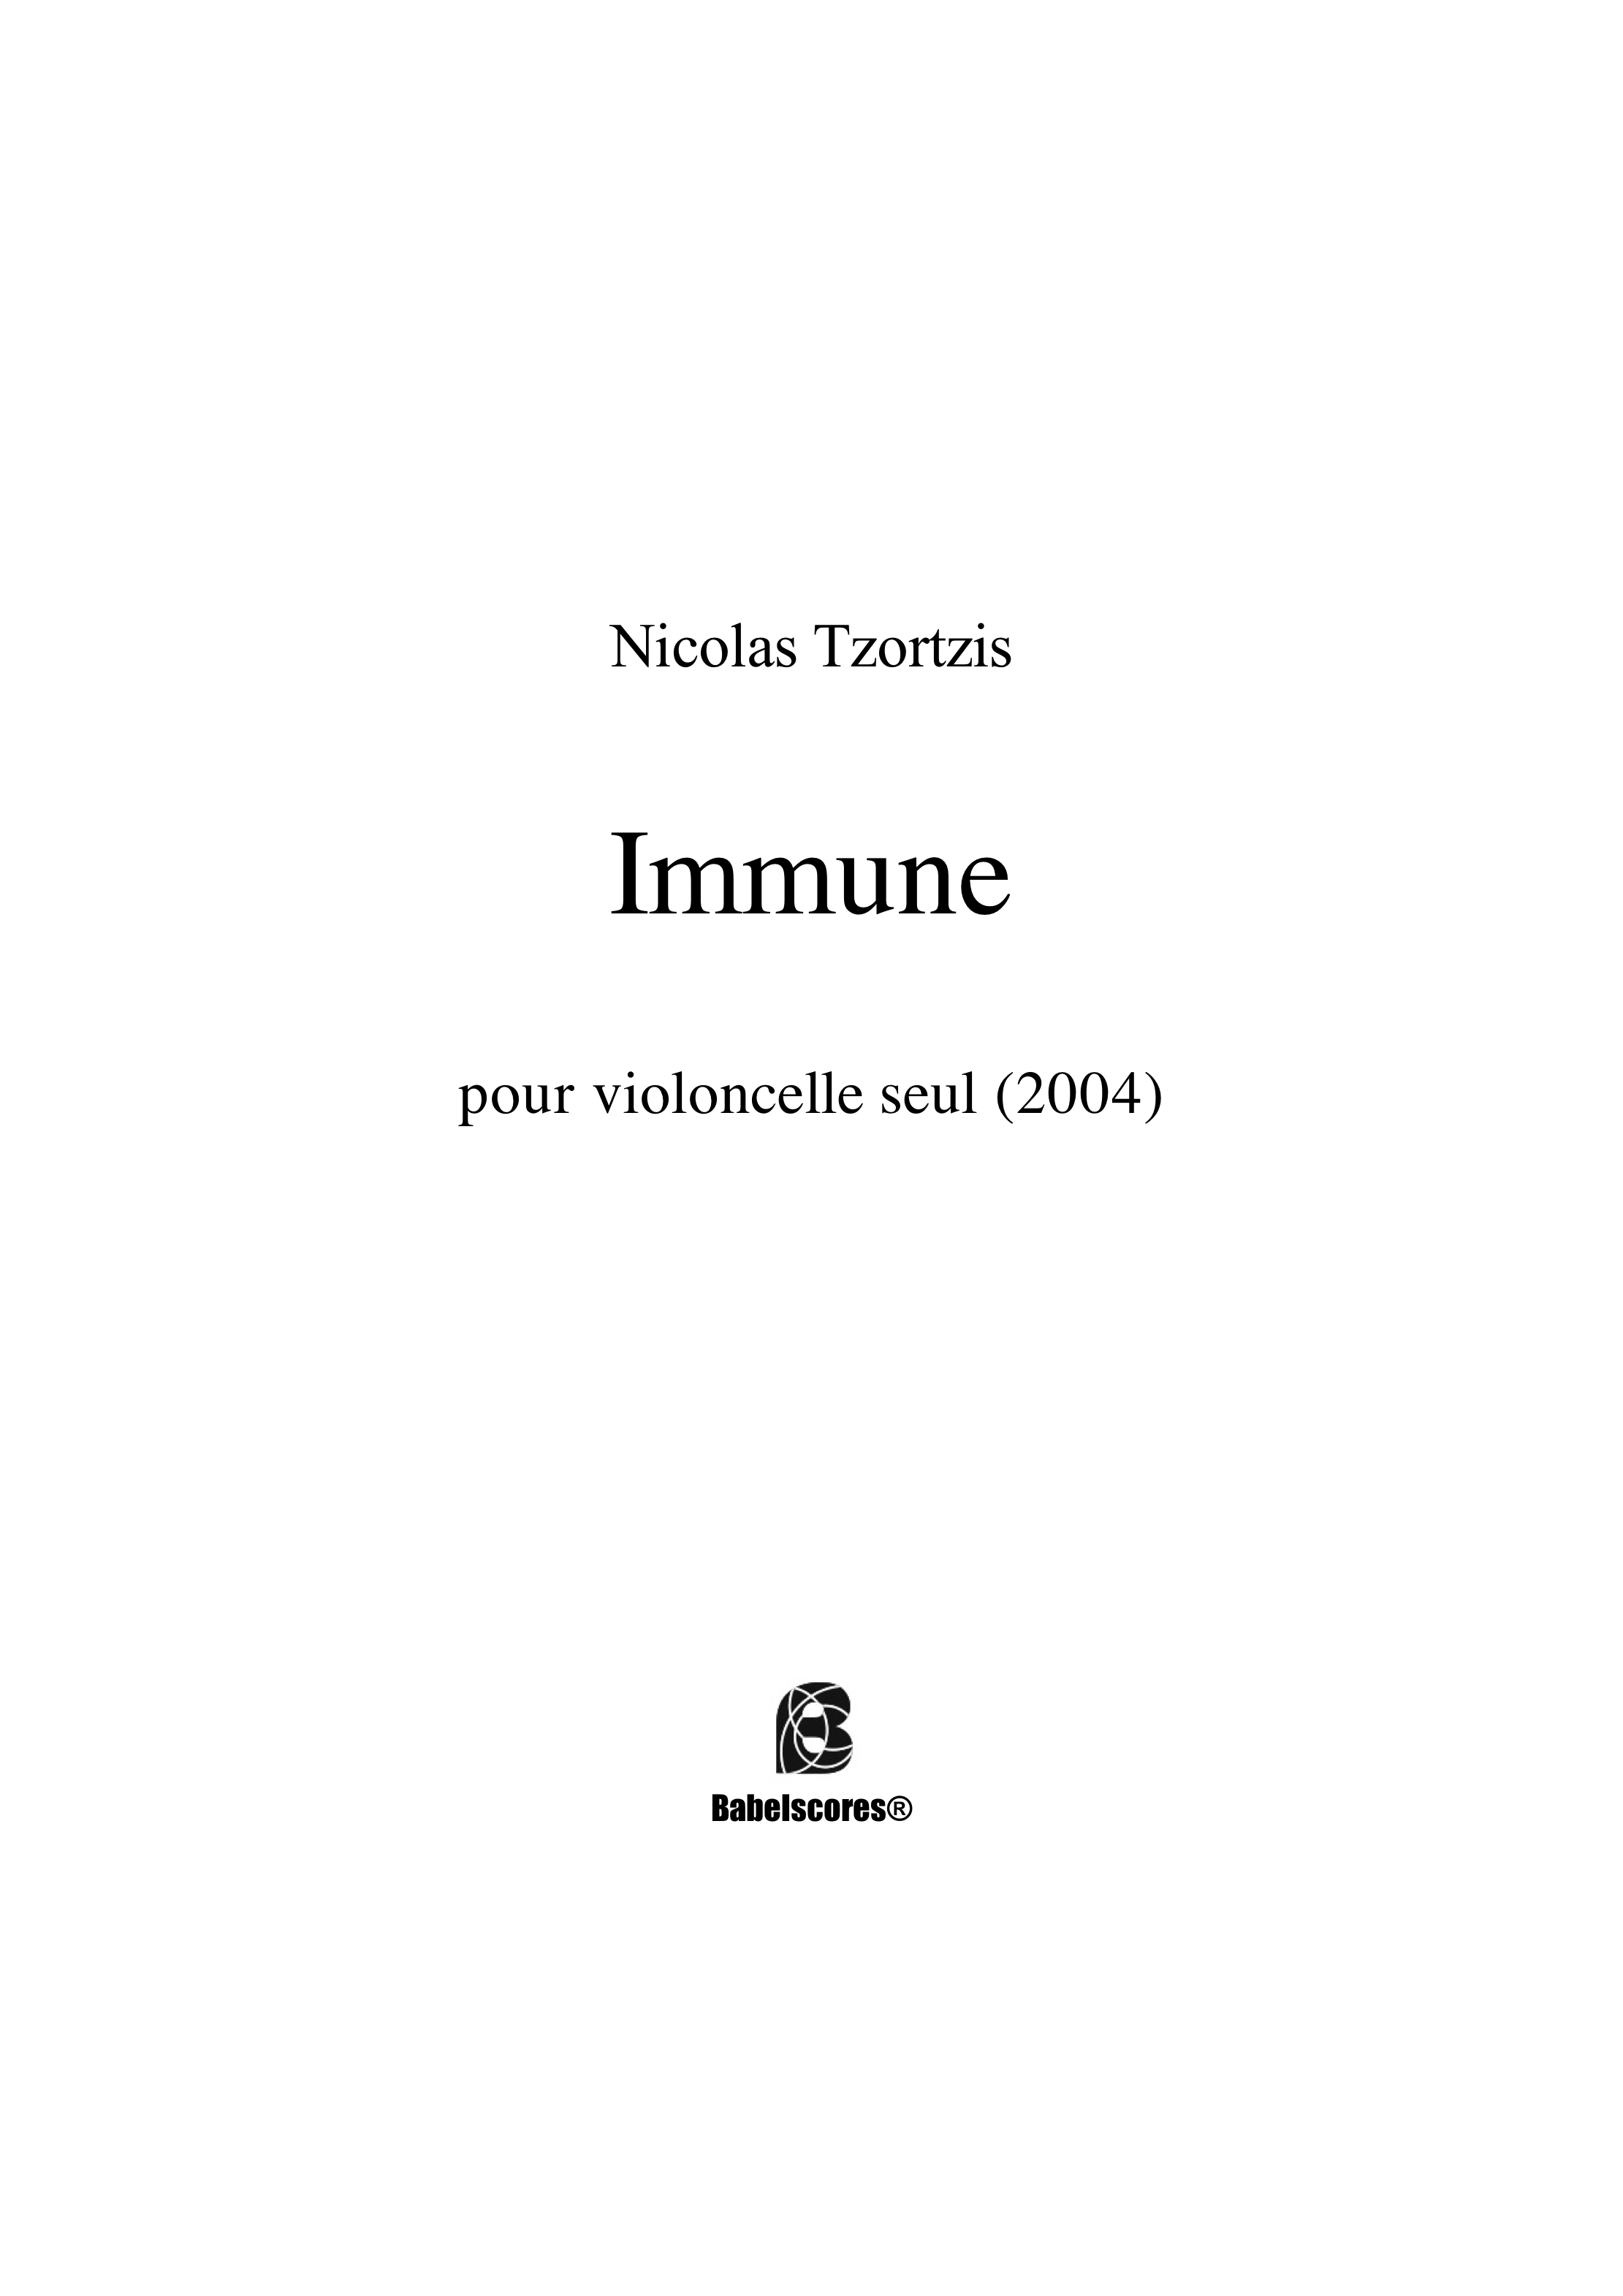 ImmuneTzortzis_BS